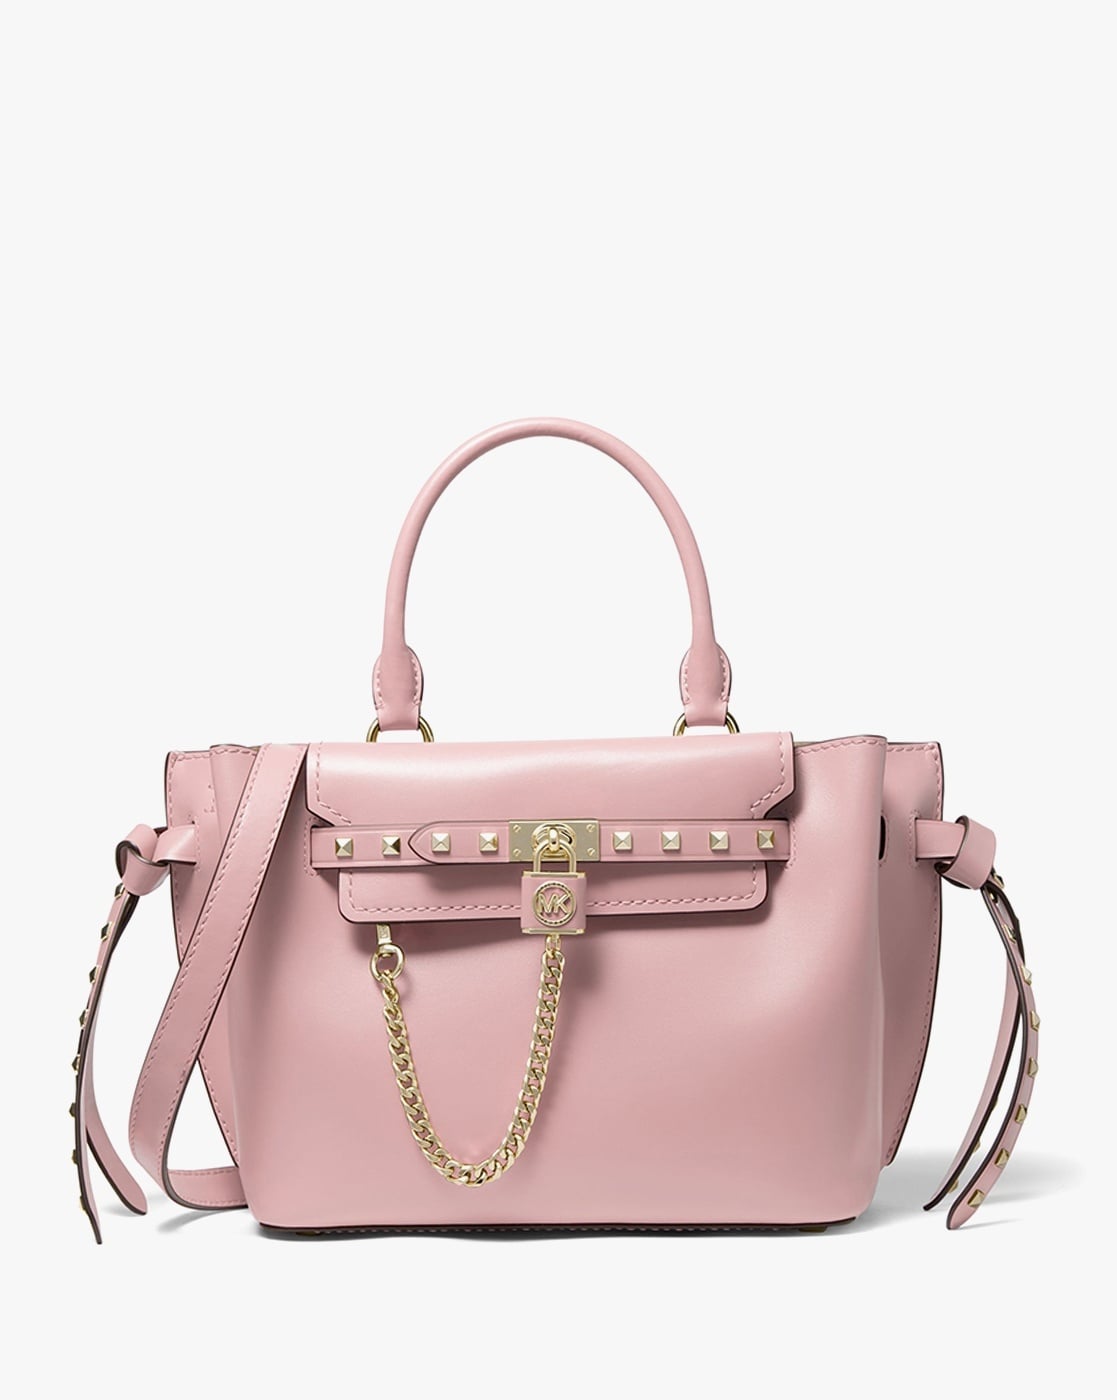 Michael Kors Large Pink Studded Leather Hamilton Handbag RARE